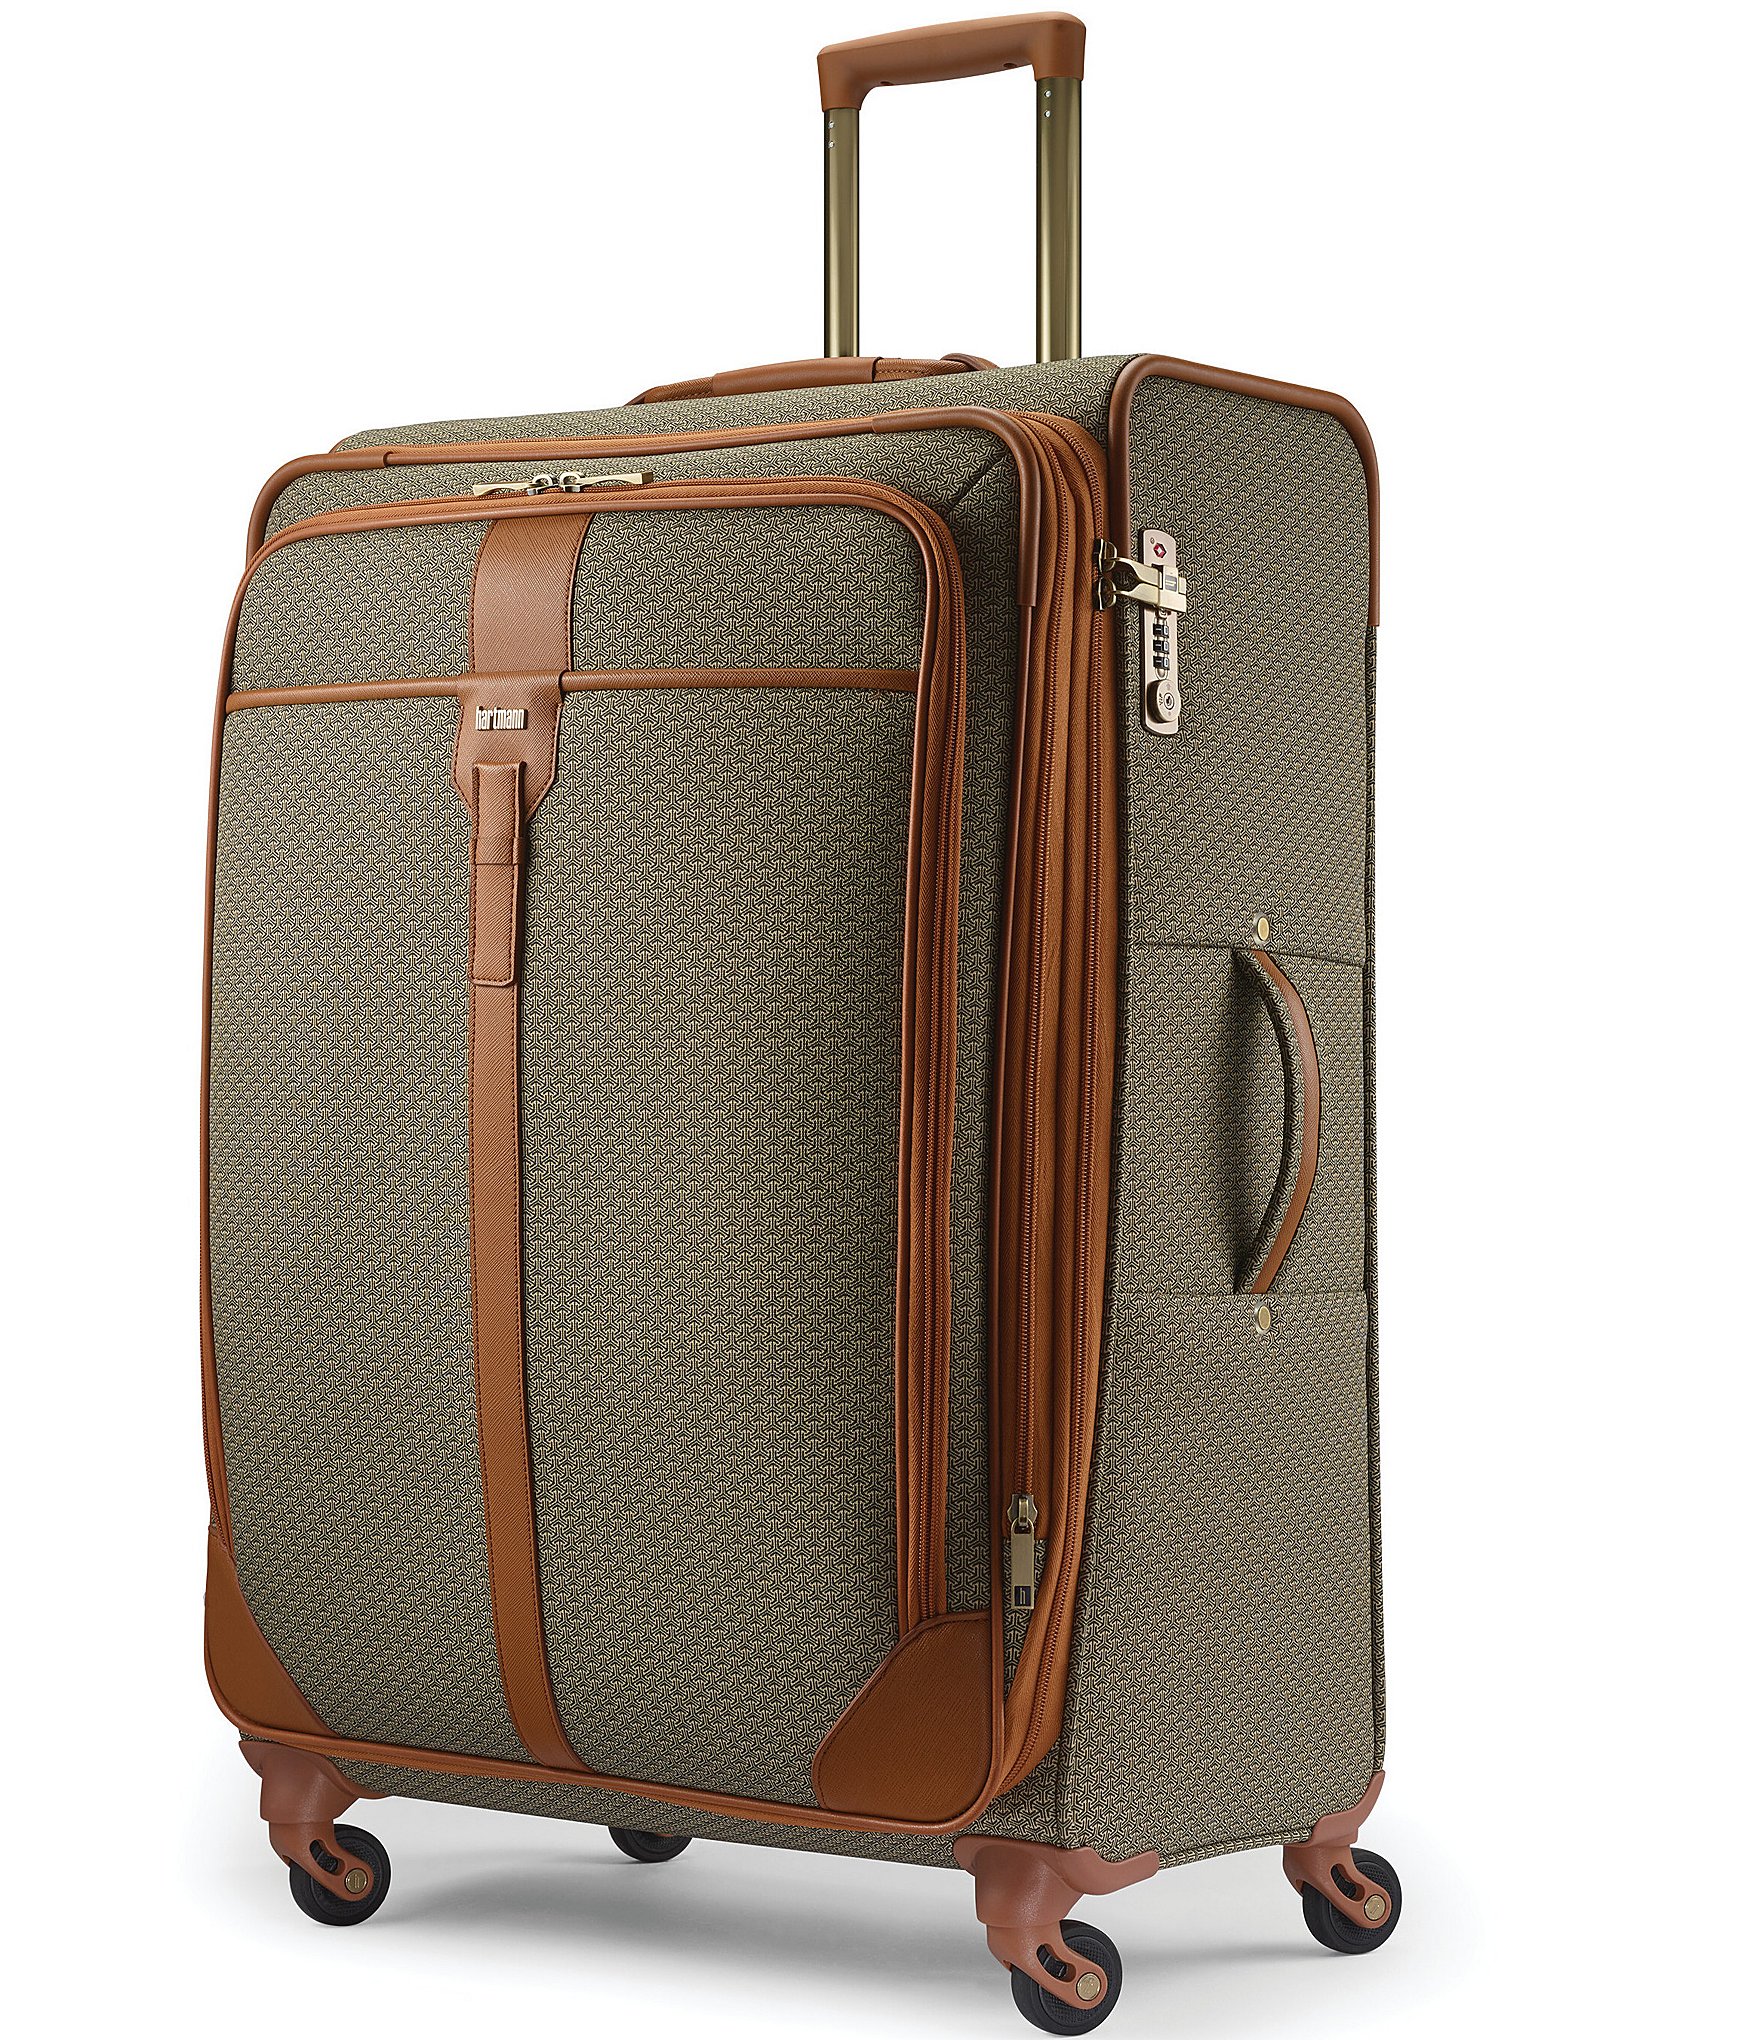 Michael Kors Signature Logo Small Travel Hardcase Trolley Suitcase, Dillard's